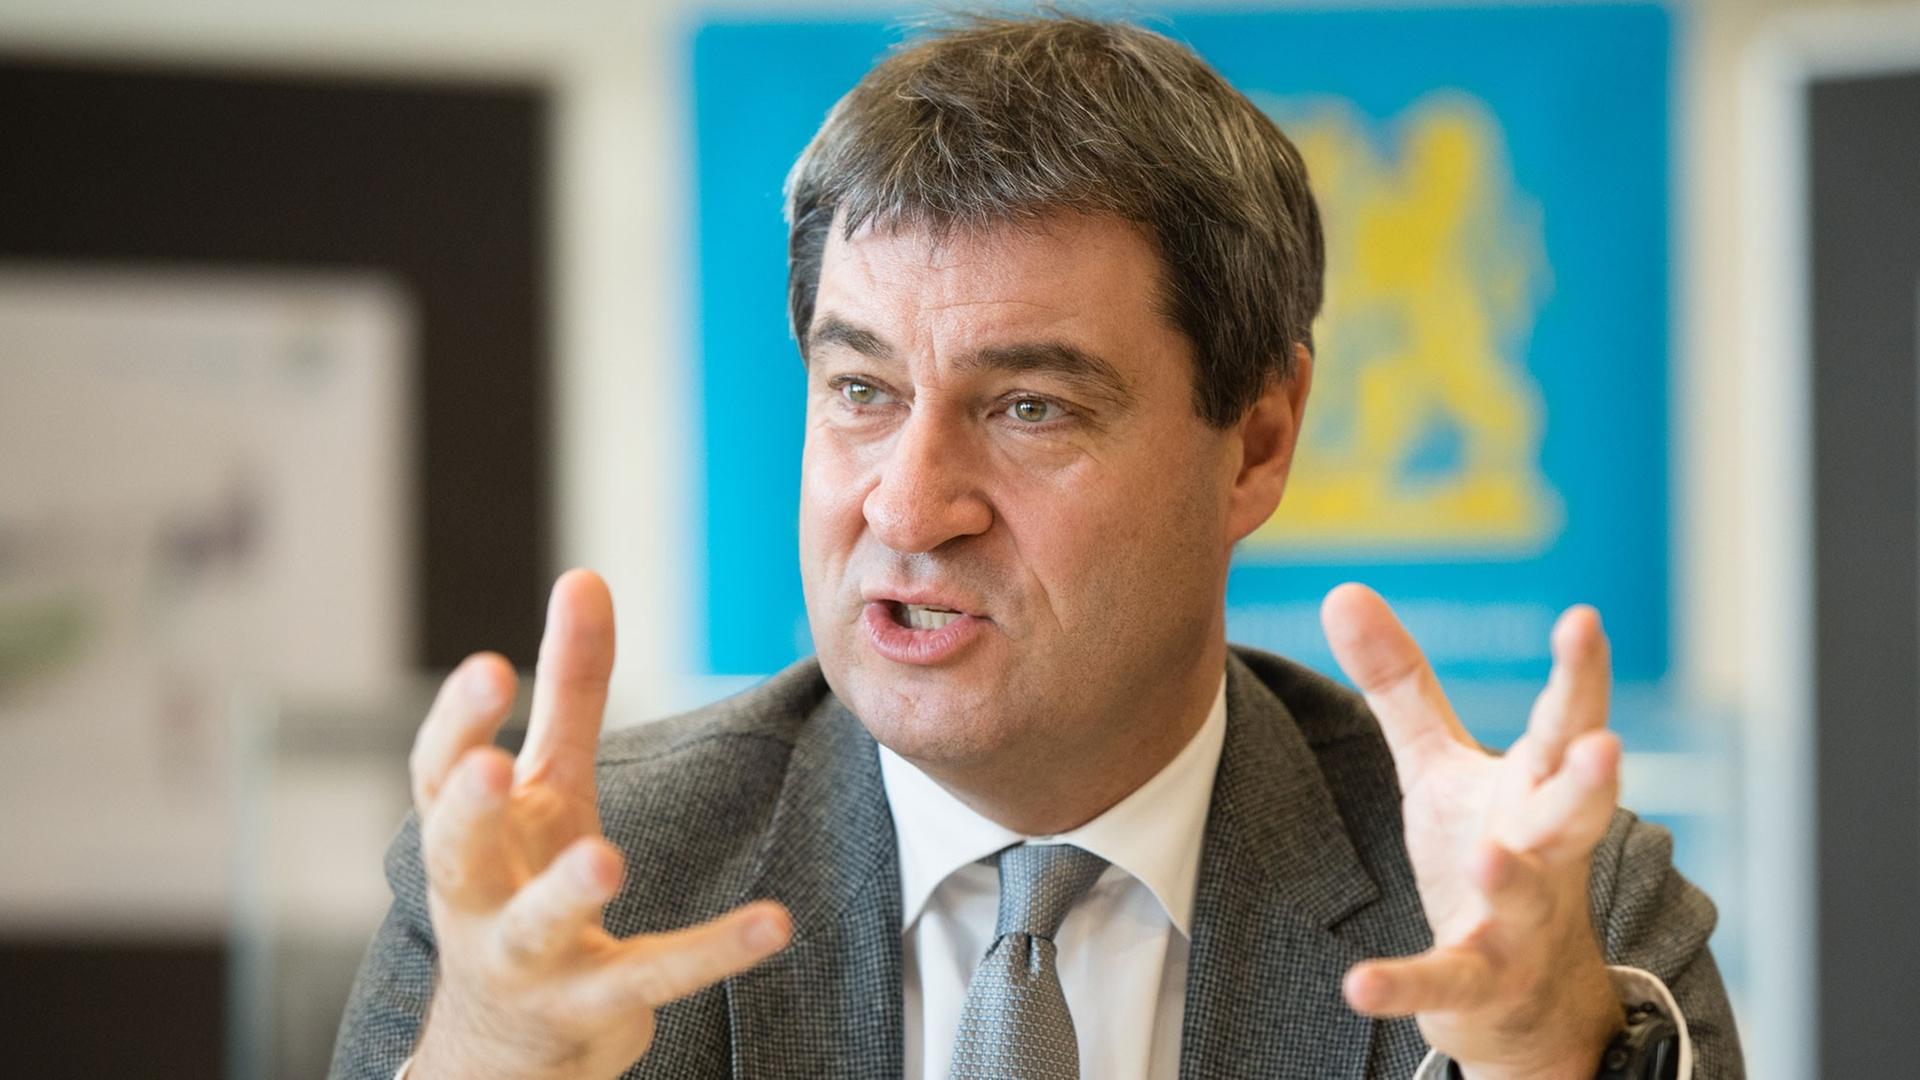 Bayerns Finanzminister Markus Söder (CSU)